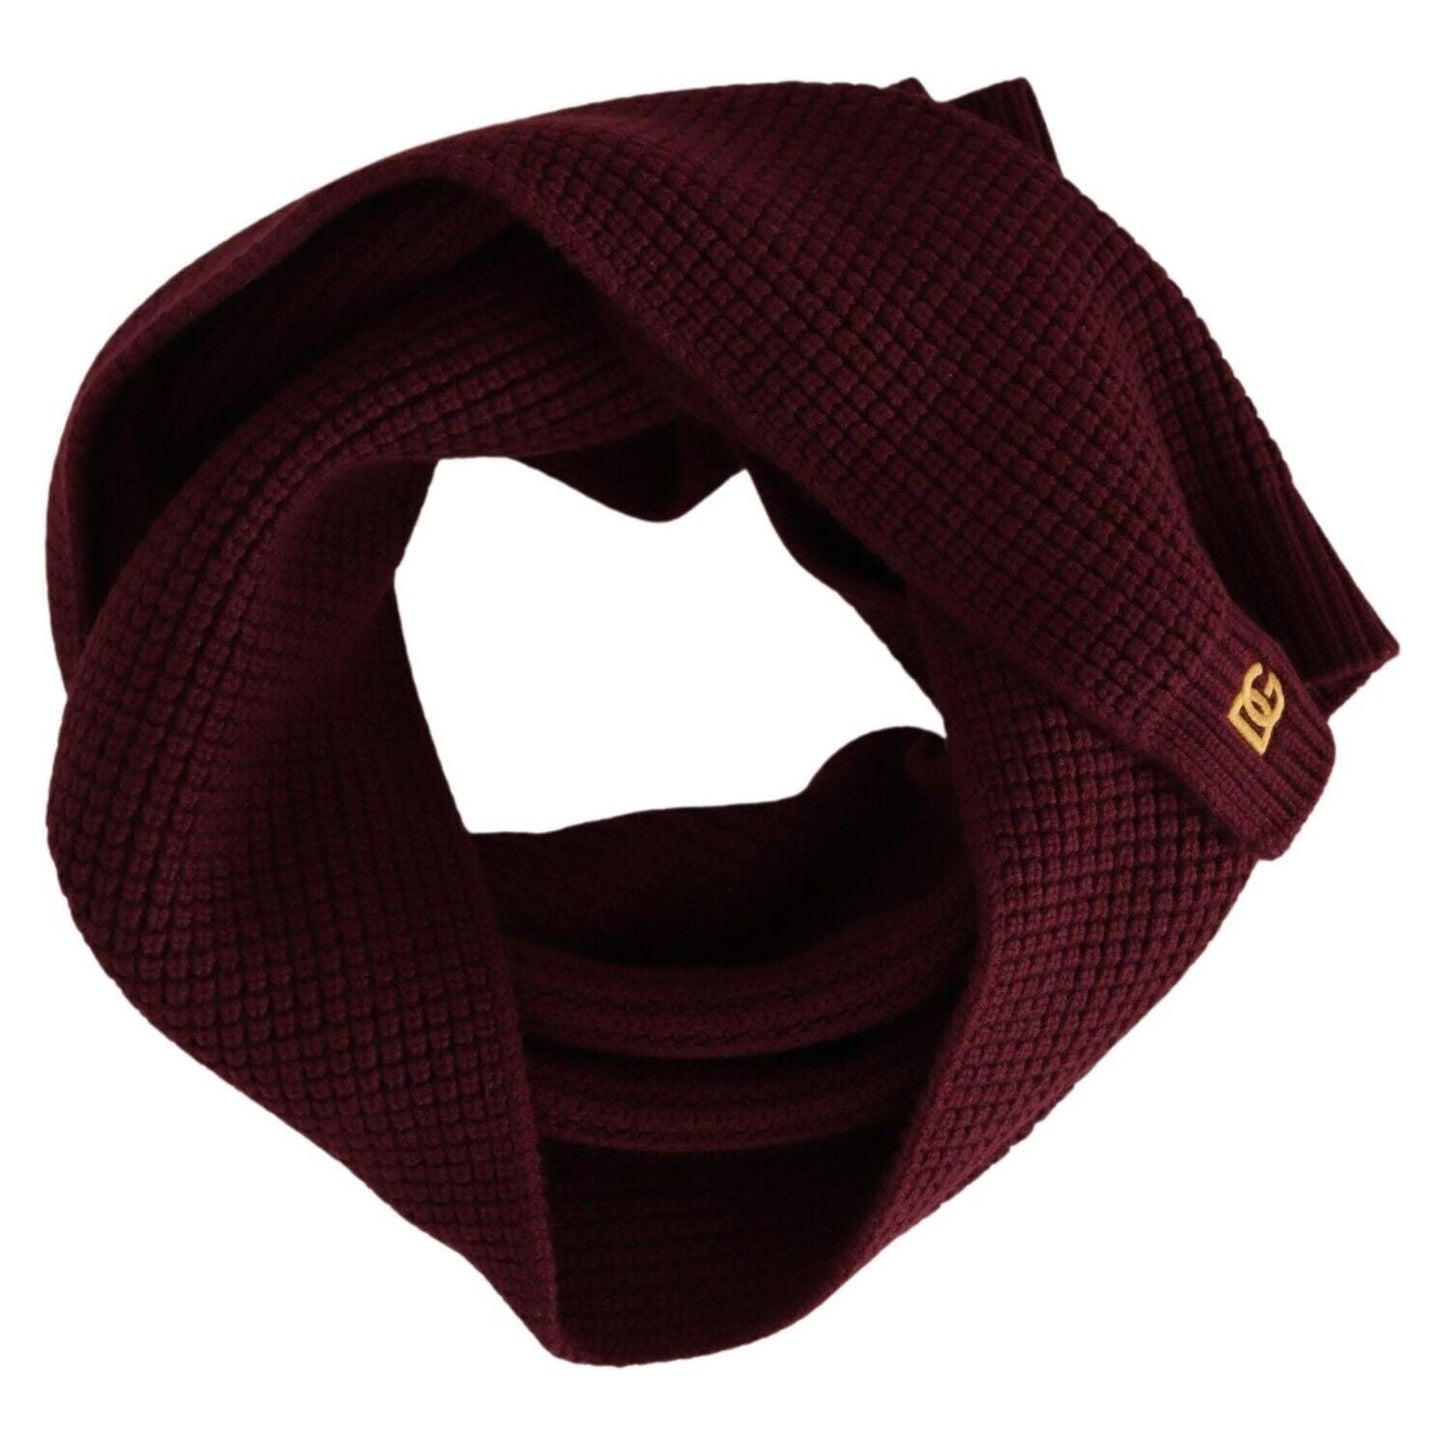 Dolce & Gabbana Elegant Cashmere Knit Scarf in Dark Red dark-red-cashmere-logo-wrap-shawl-knitted-scarf s-l1600-3-6-3dd35fbc-009.jpg